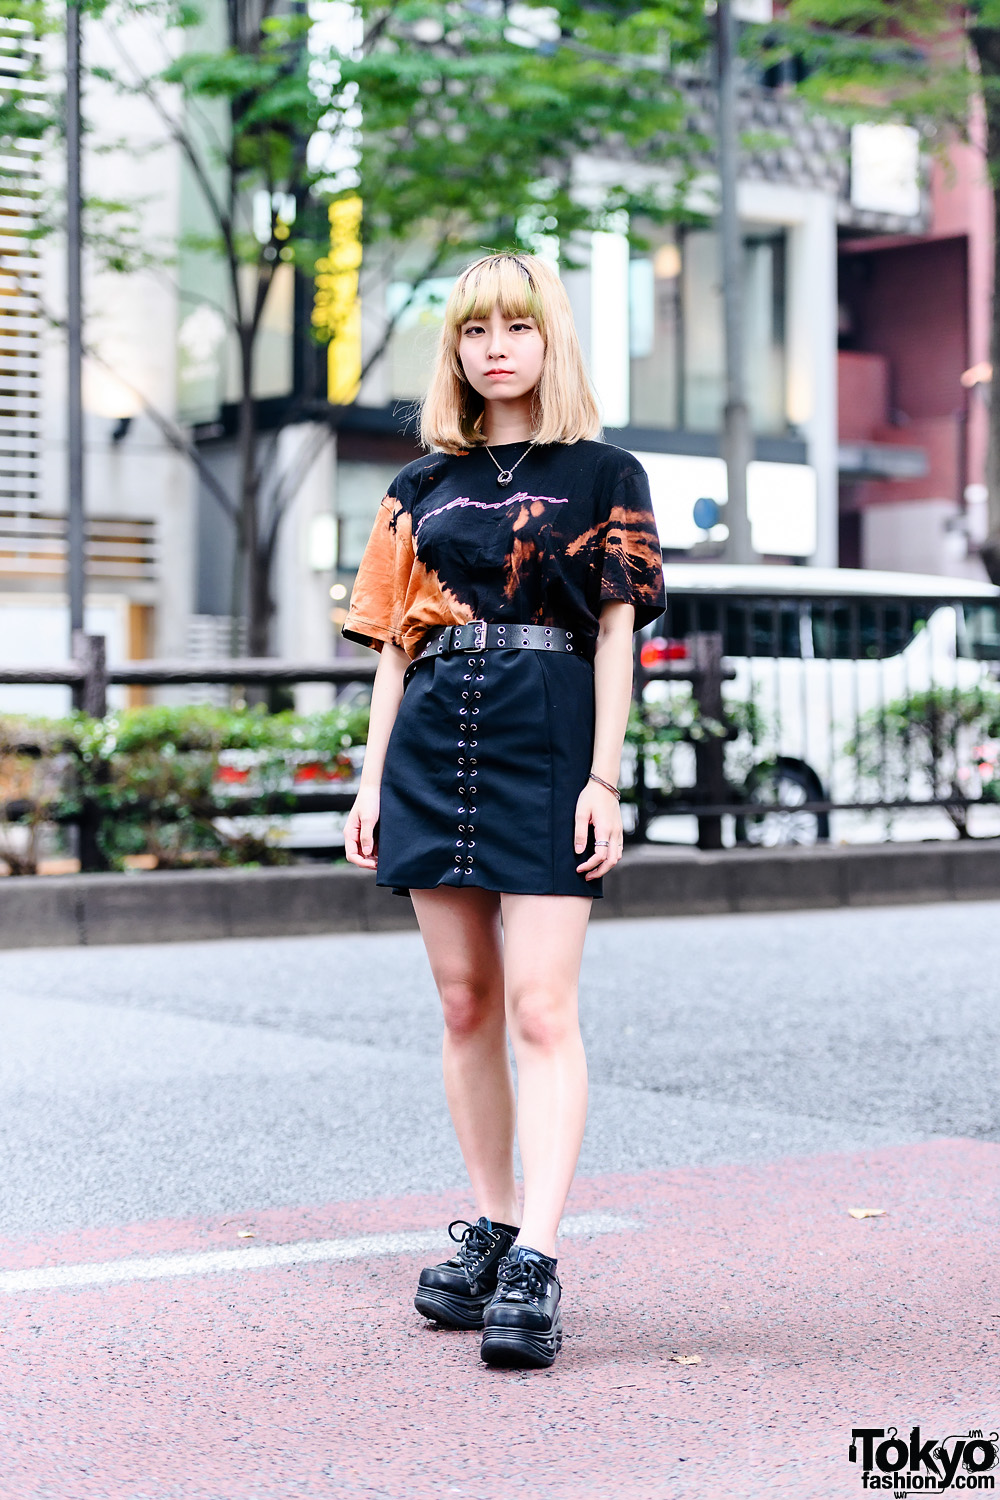 Harajuku Girl Streetwear Style w/ Blonde Bob, Remake Instinctive T-Shirt, Lace-Up Skirt, Bless Accessories & Yosuke Shoes